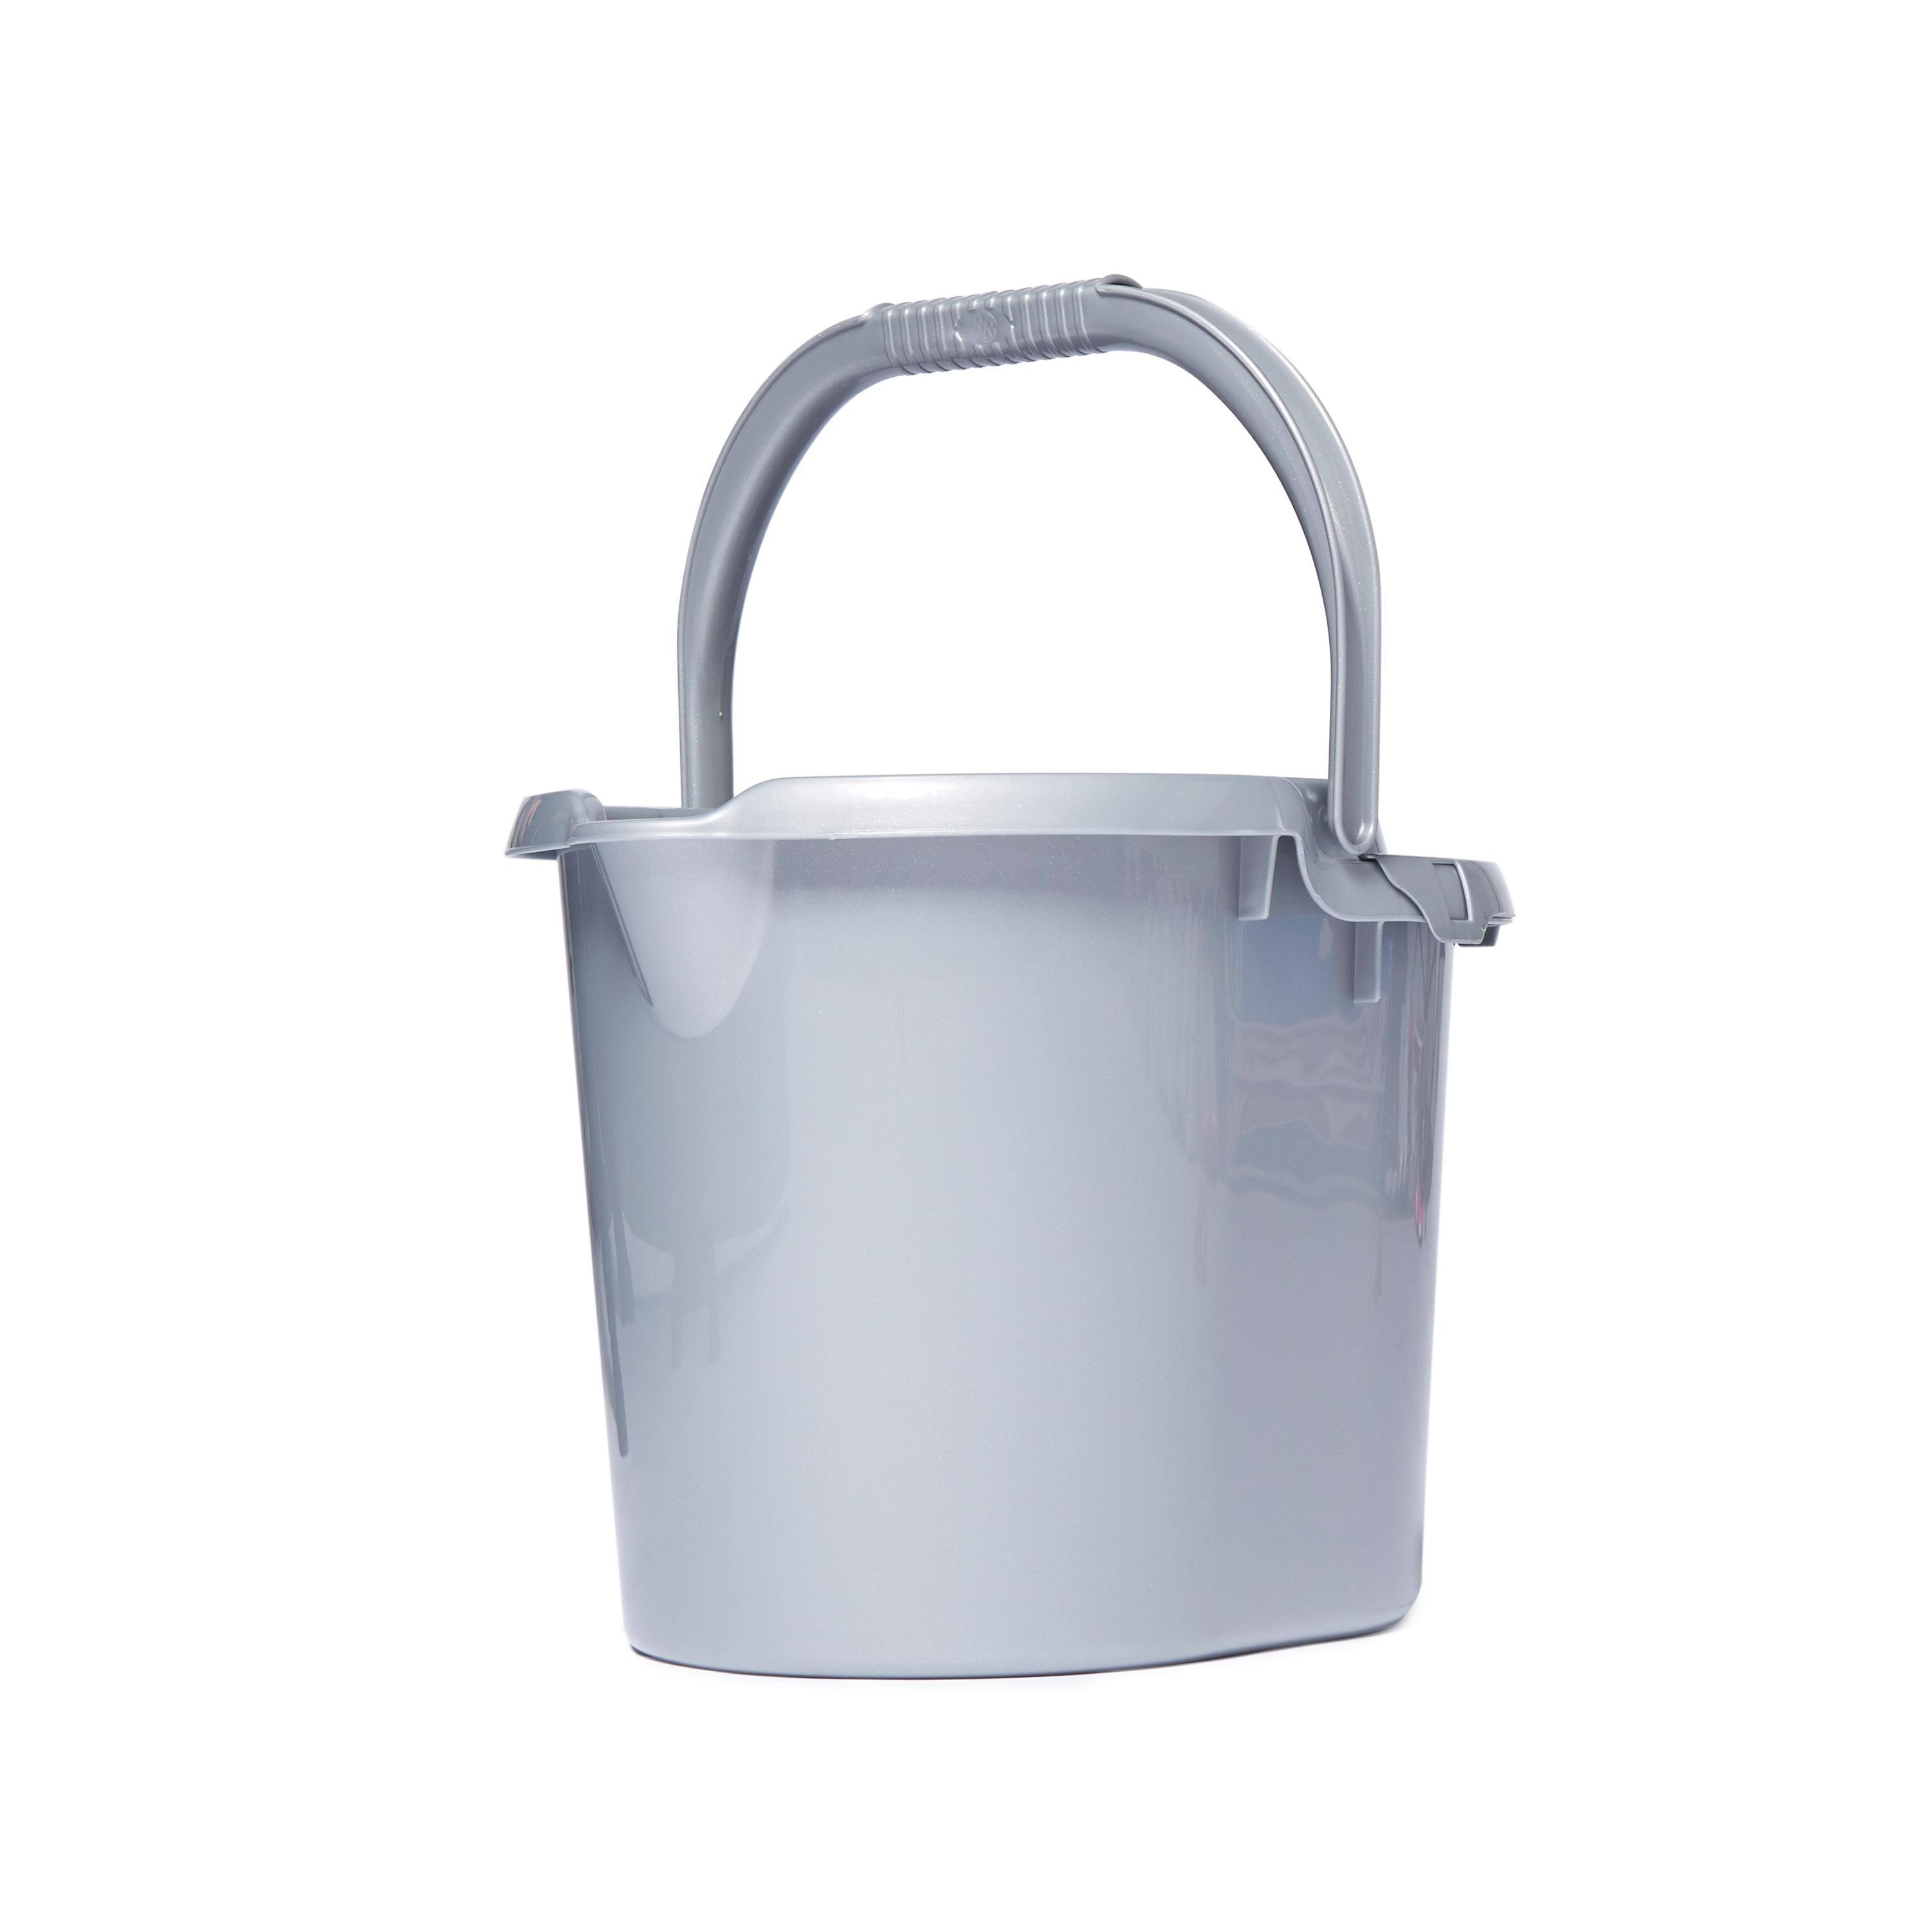 Wham Mop Bucket - Silver